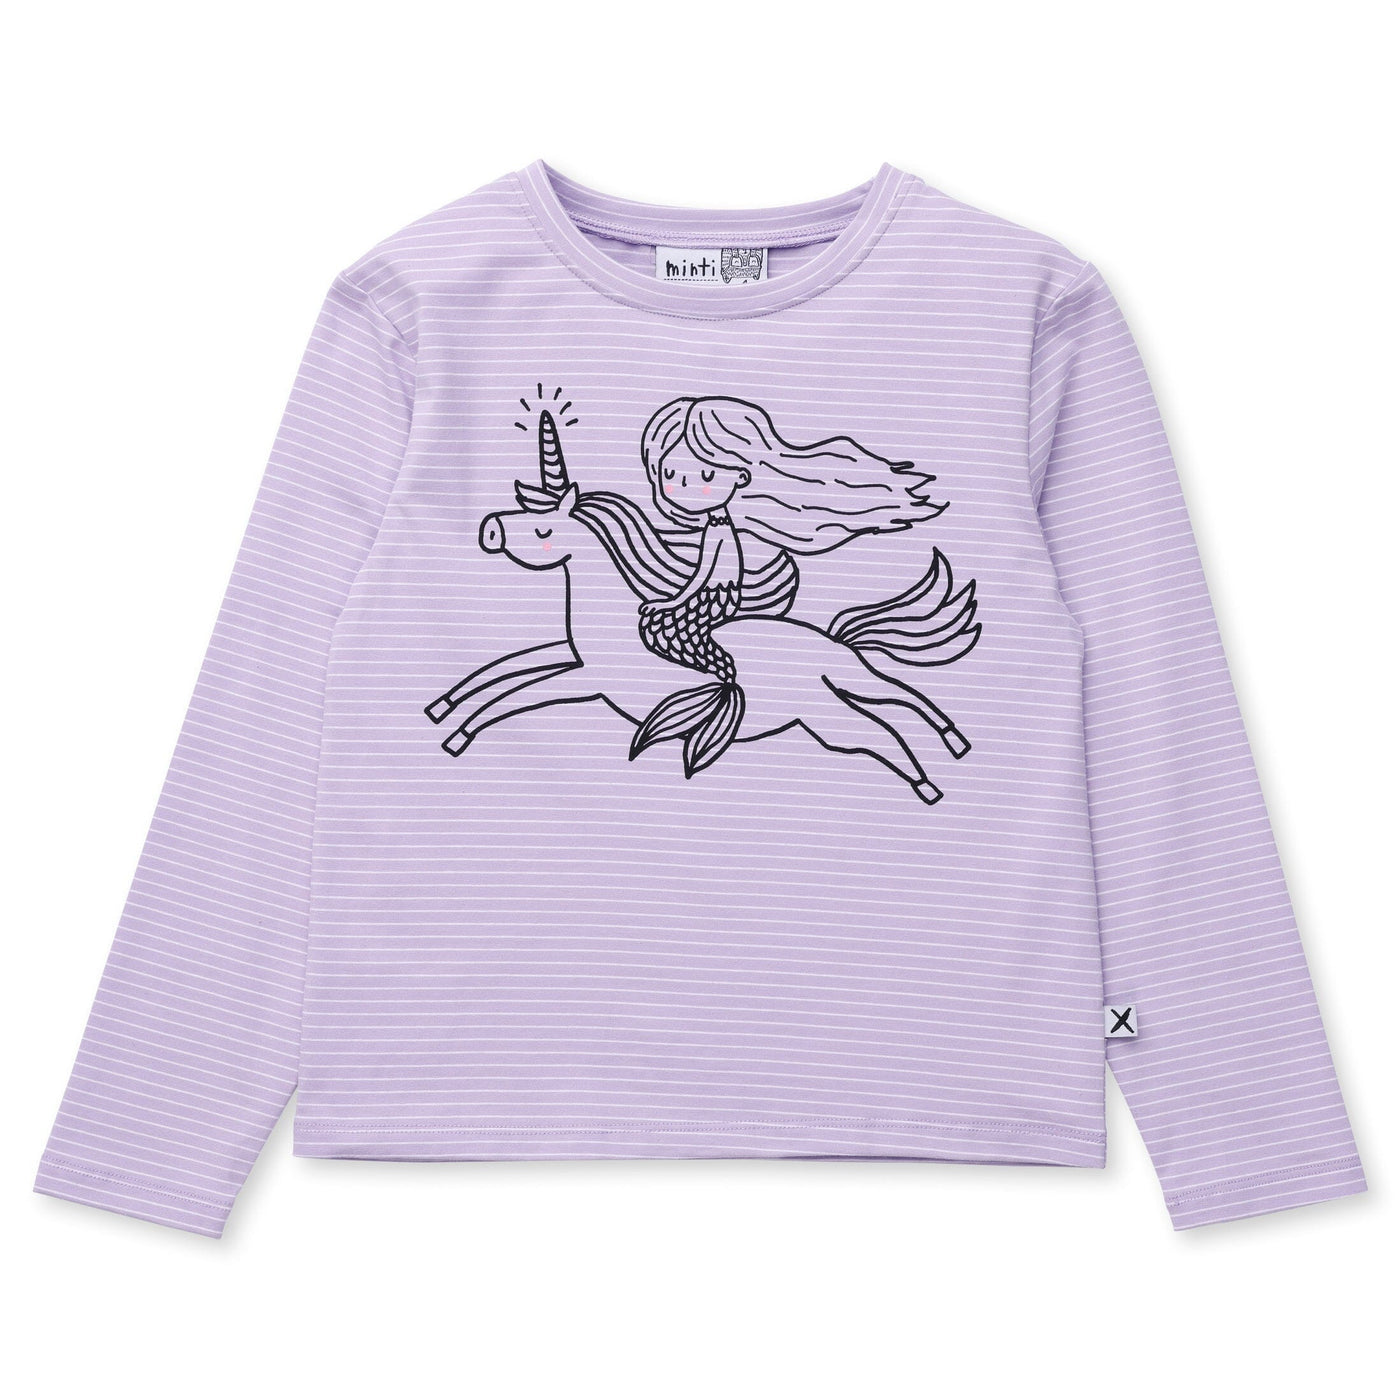 Minti Mermaid And Unicorn Tee - Lilac Stripe Long Sleeve T-Shirt Minti 